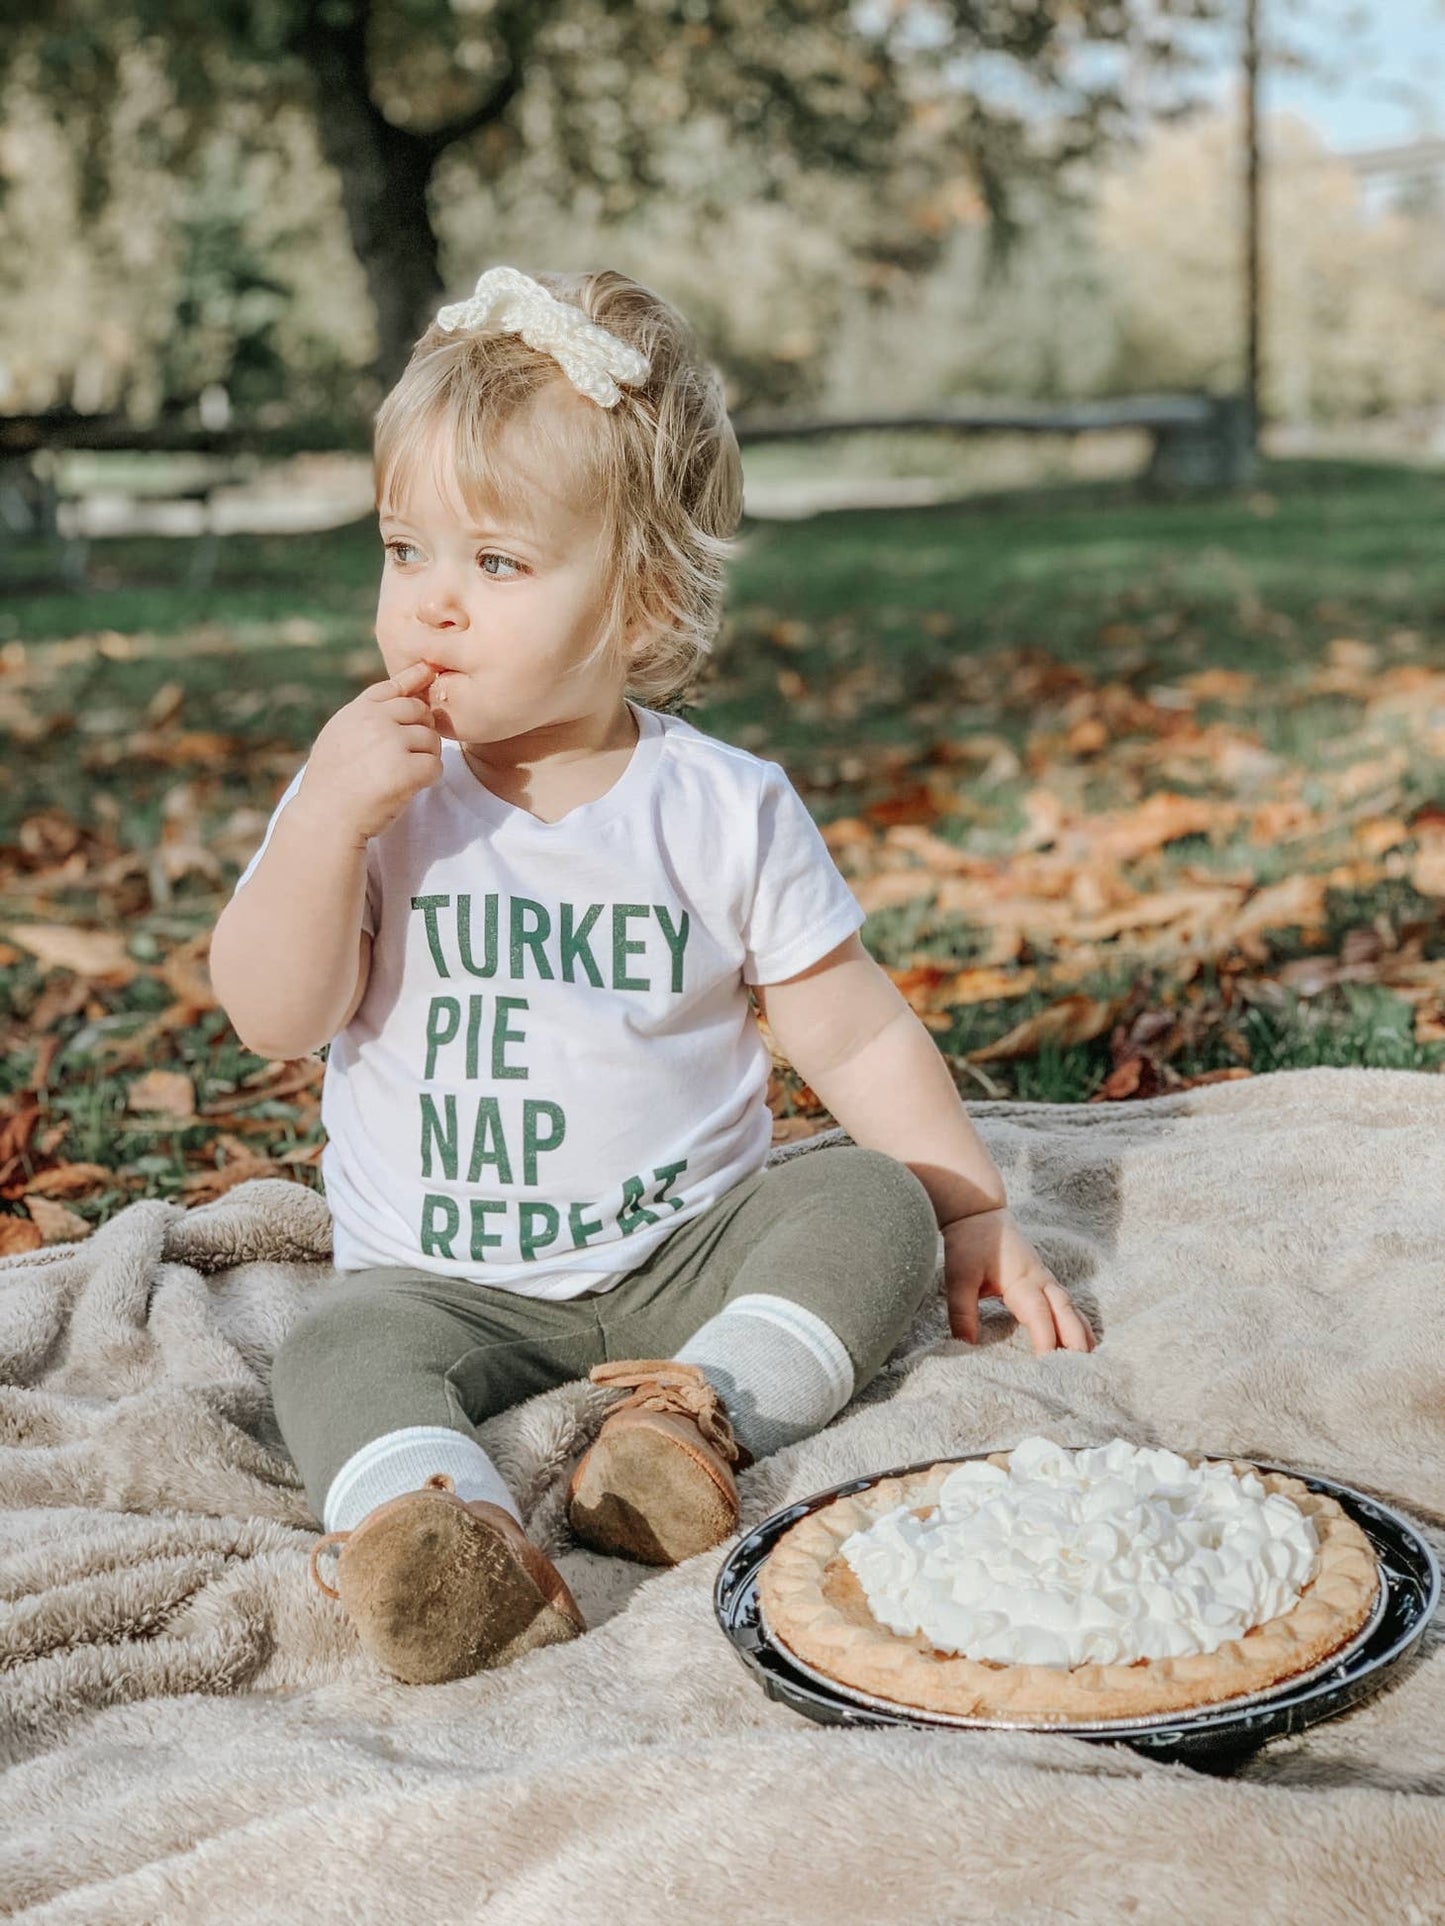 Turkey Pie Nap Repeat Kid's Graphic Tee, White